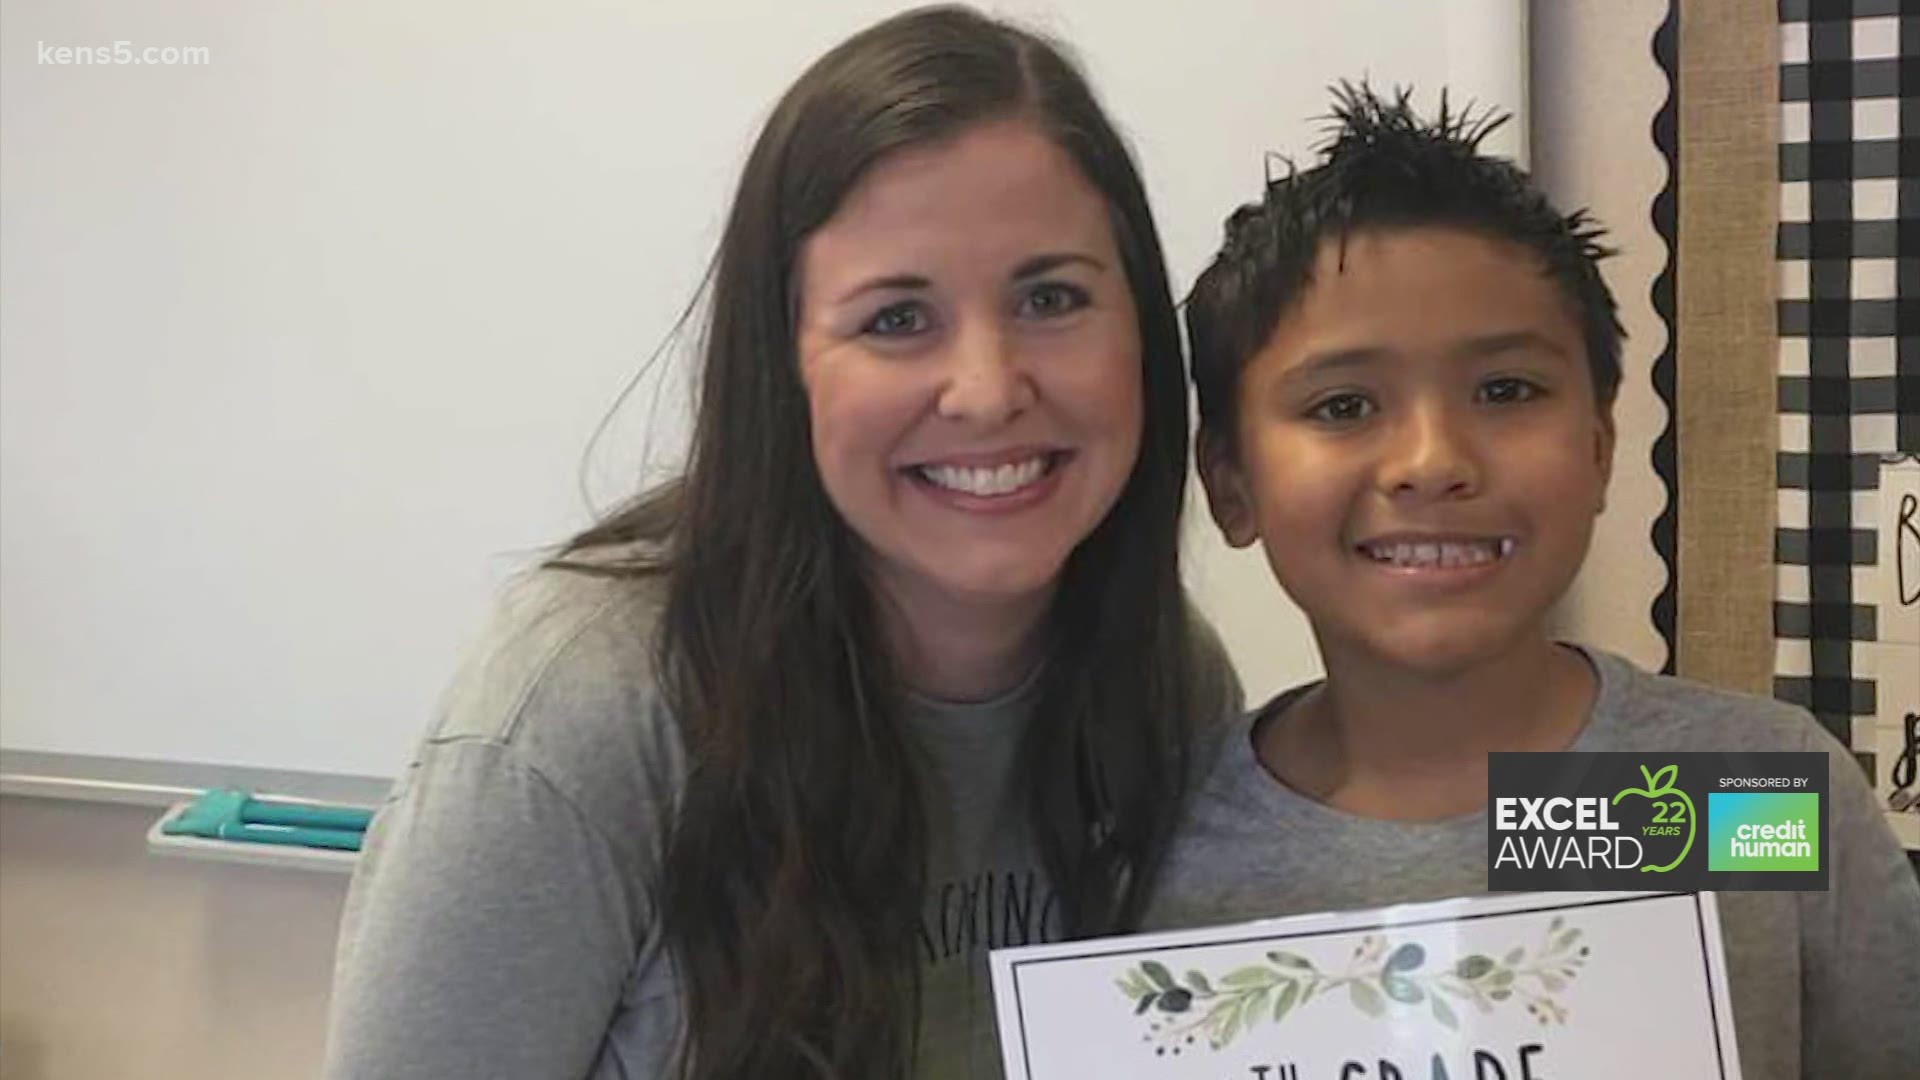 Royal Ridge Elementary's Vanessa Kerr is KENS 5's EXCEL Award winner!